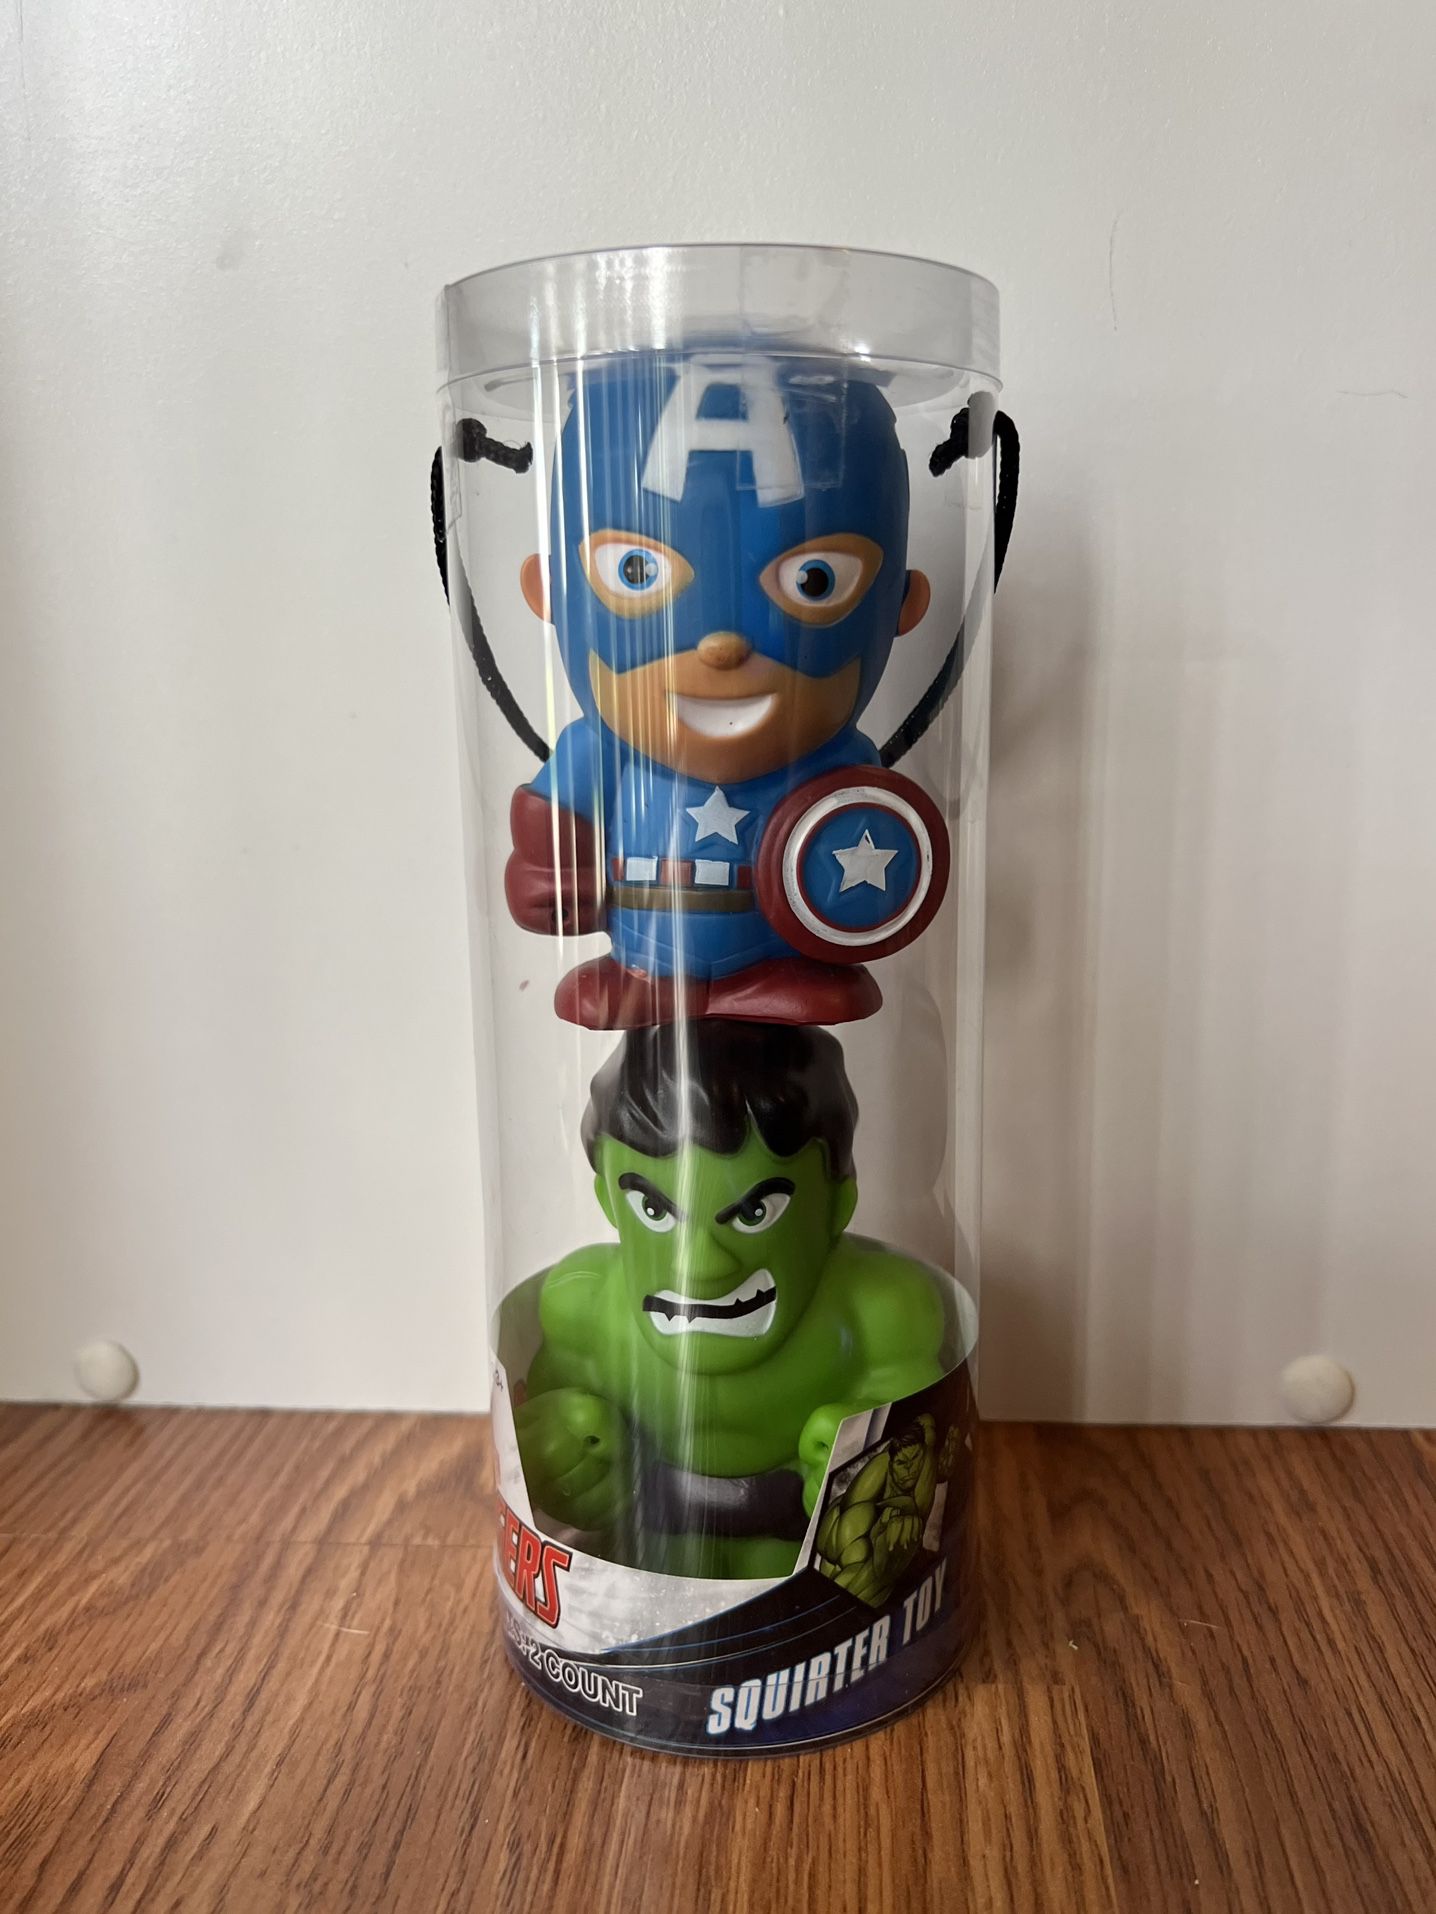 Disney Marvel Captain America And The Hulk Bath Squirter Toy